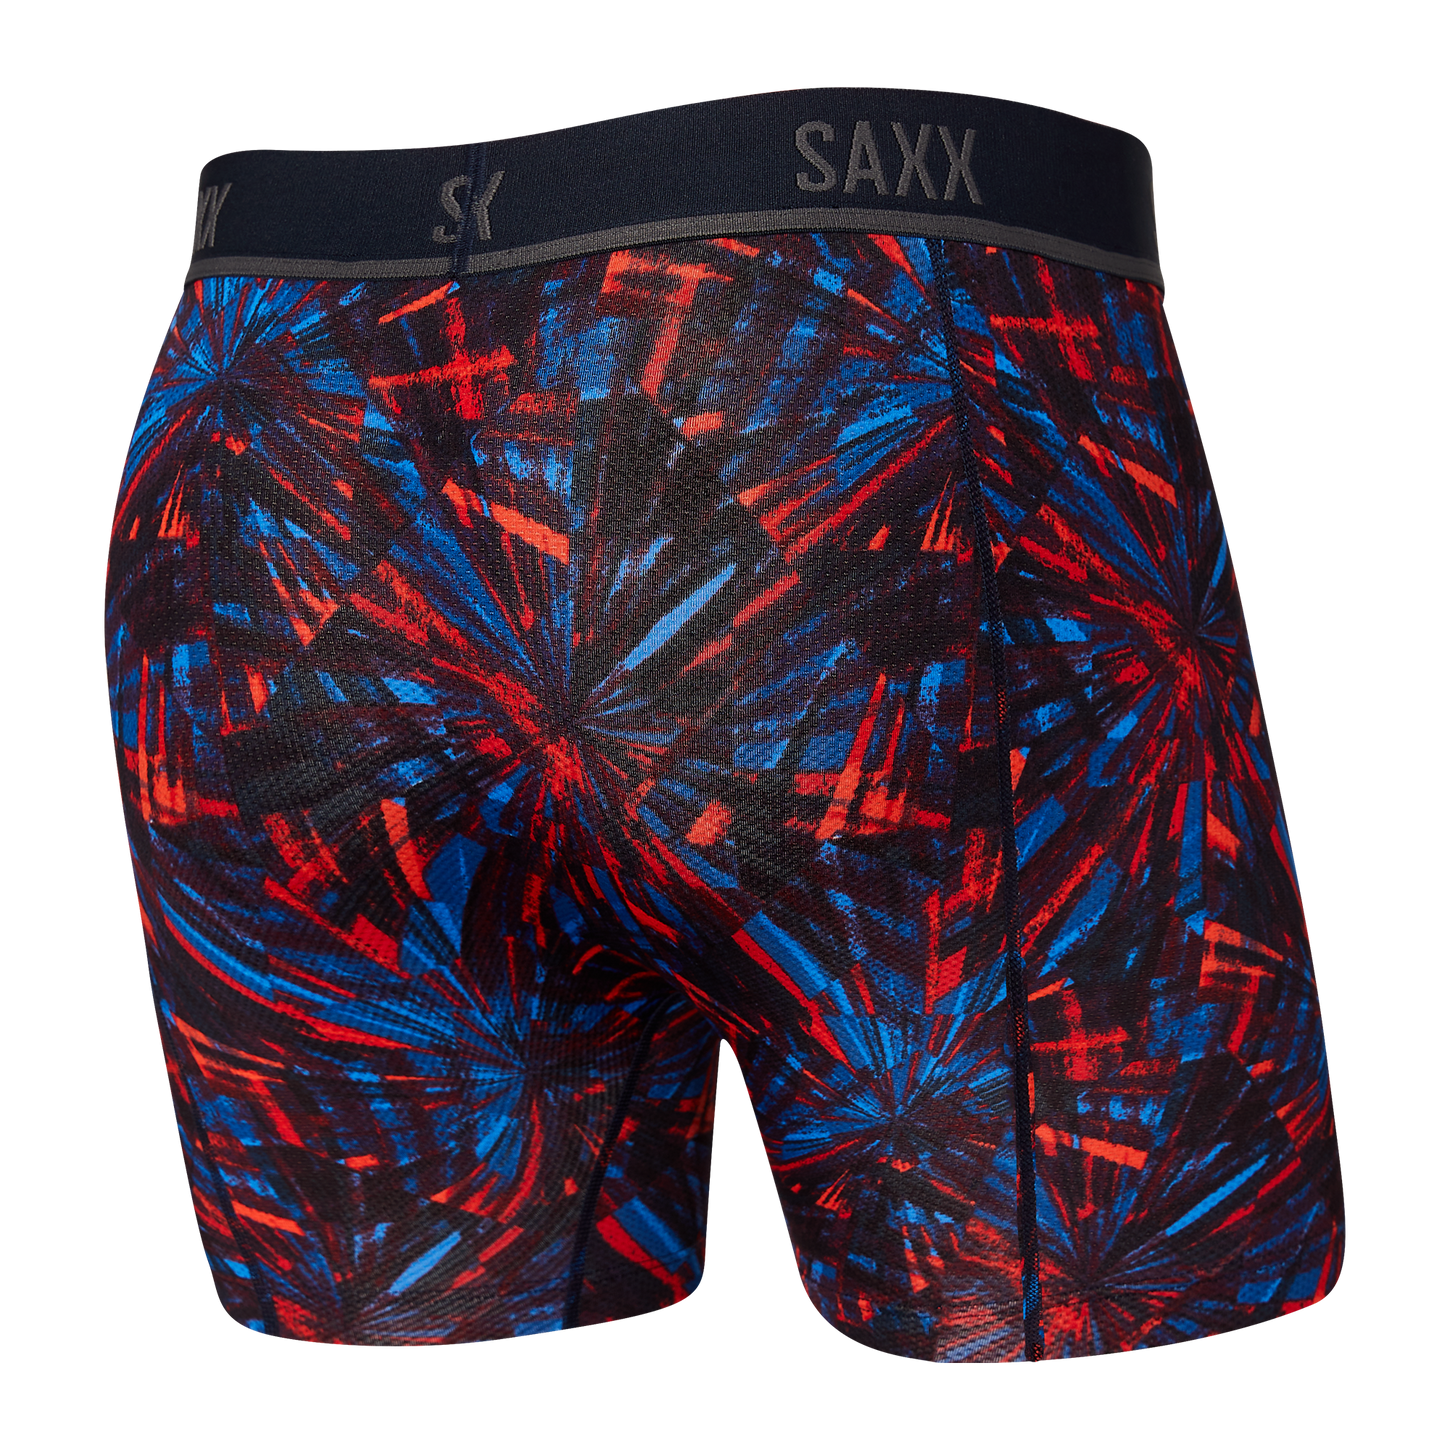 SAXX Kinetic HD Boxer Brief Fireworks Multi